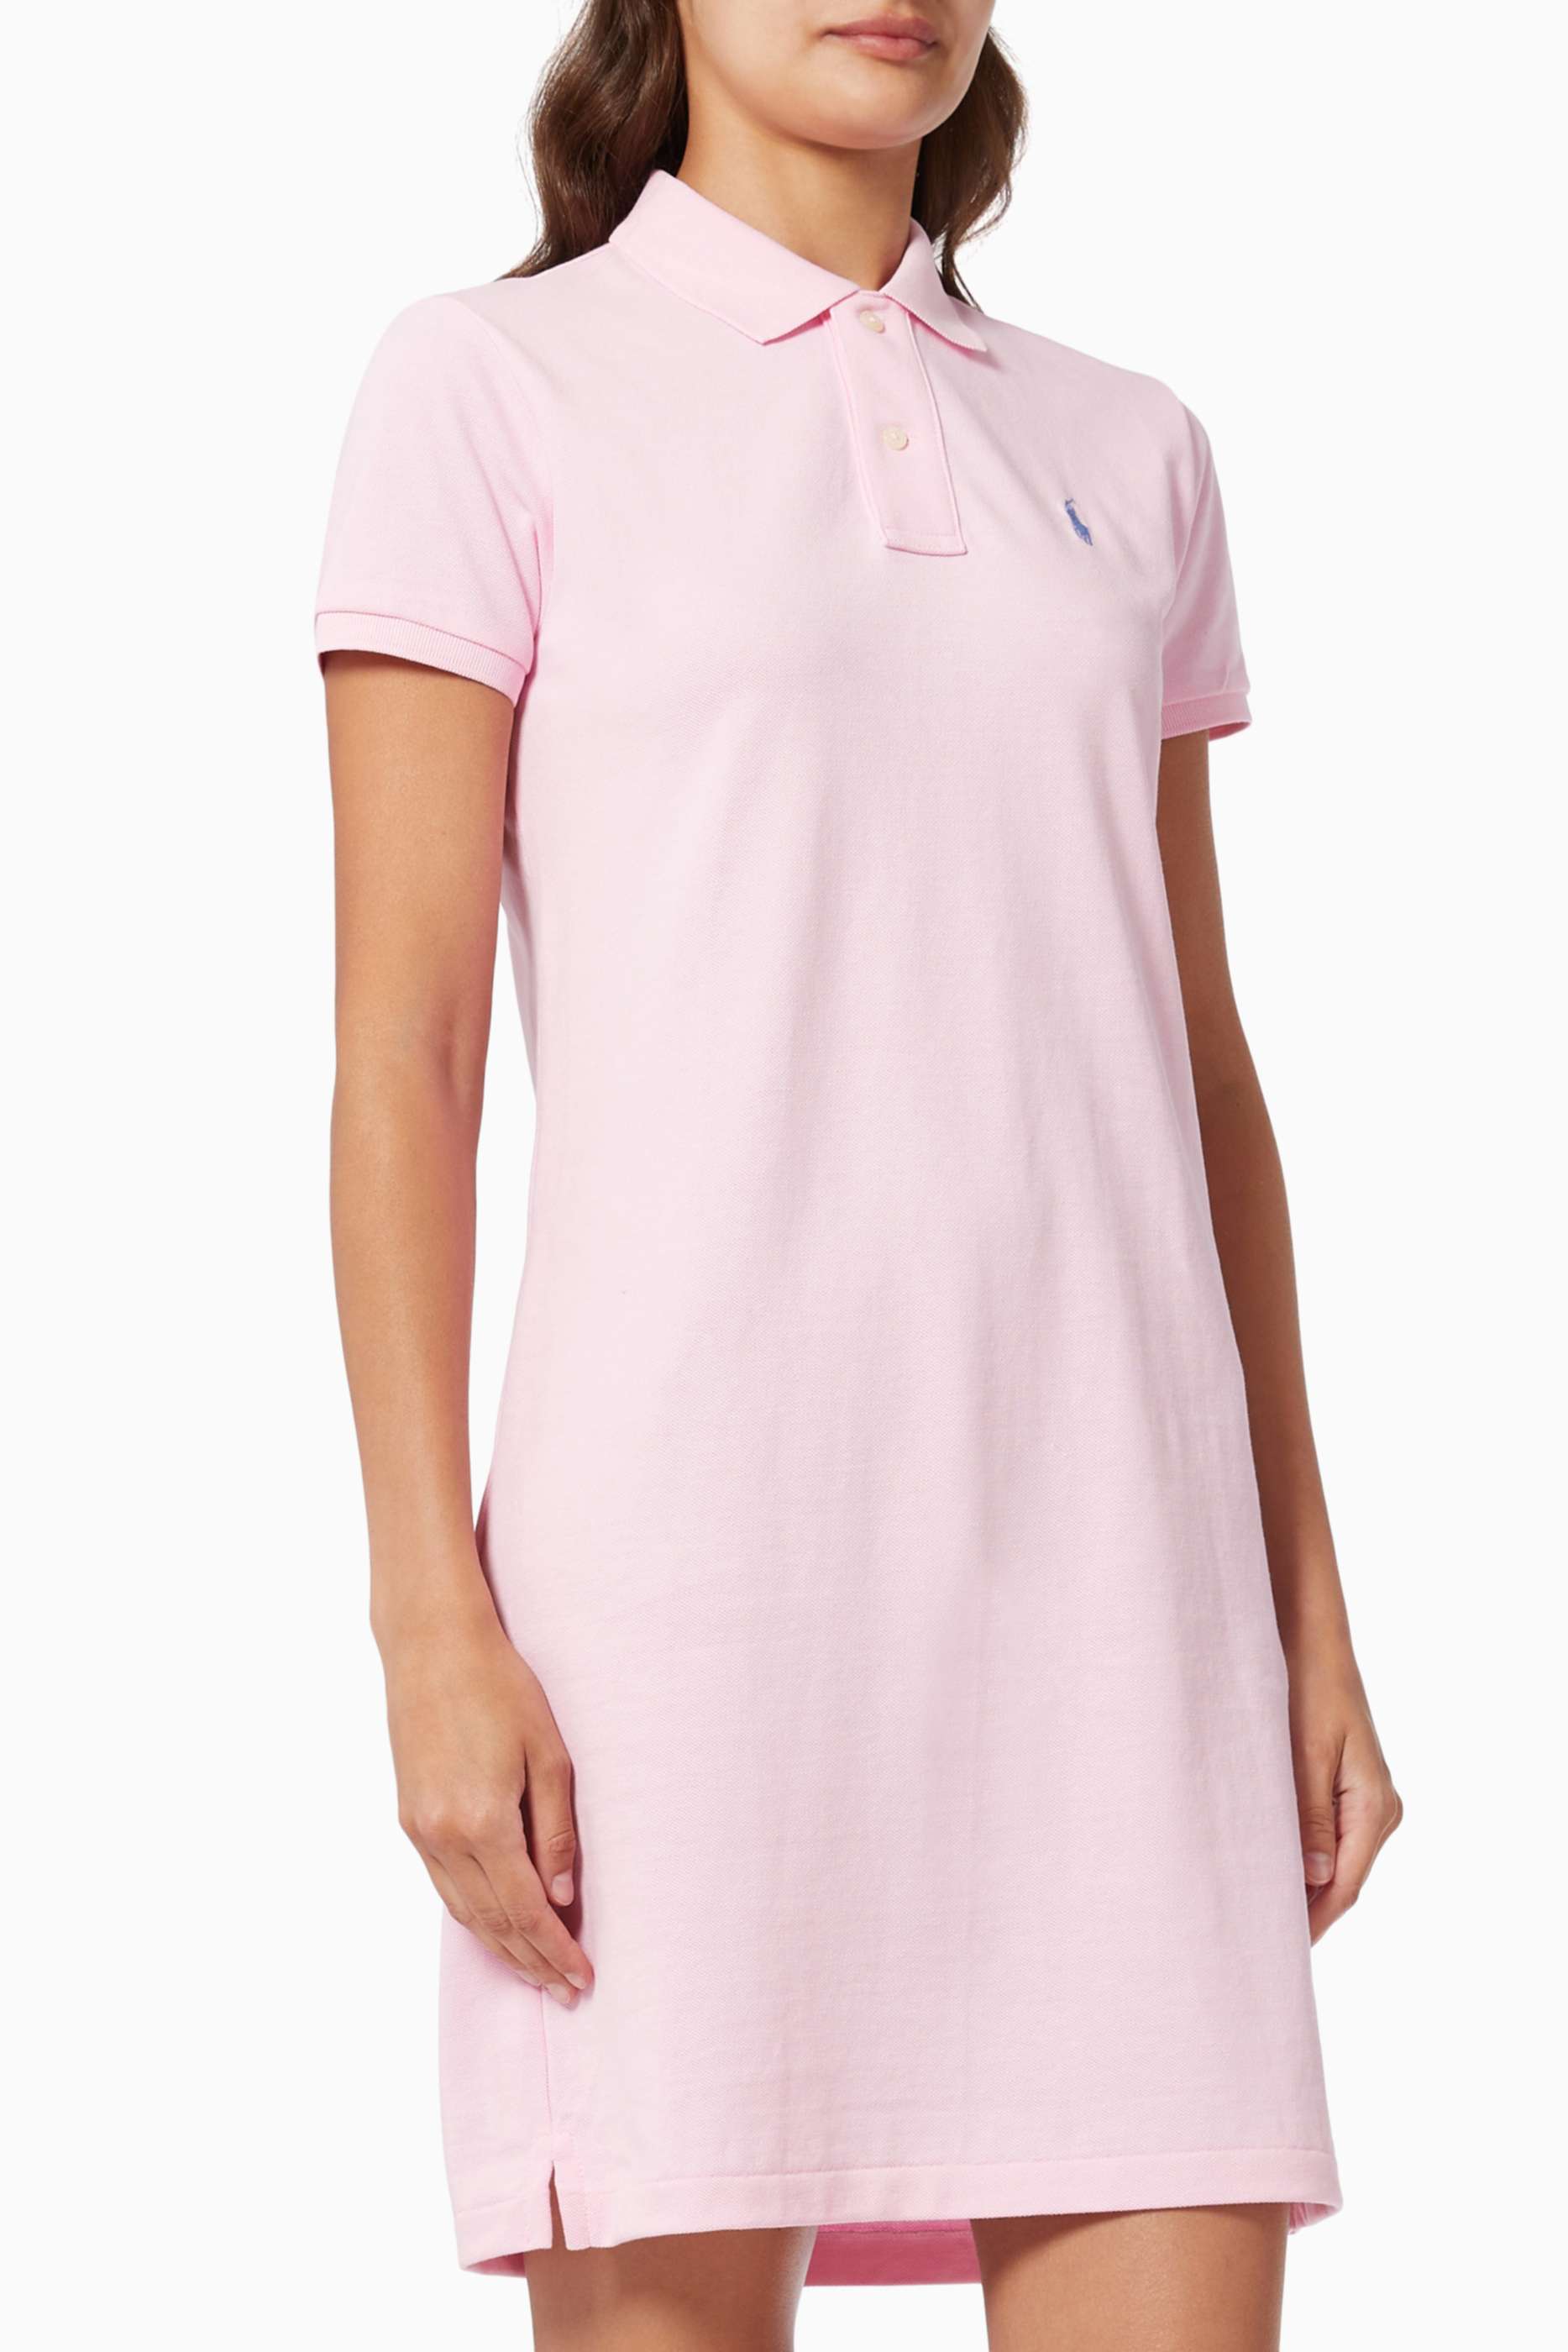 Polo Ralph Lauren Pink Logo Polo Dress ...